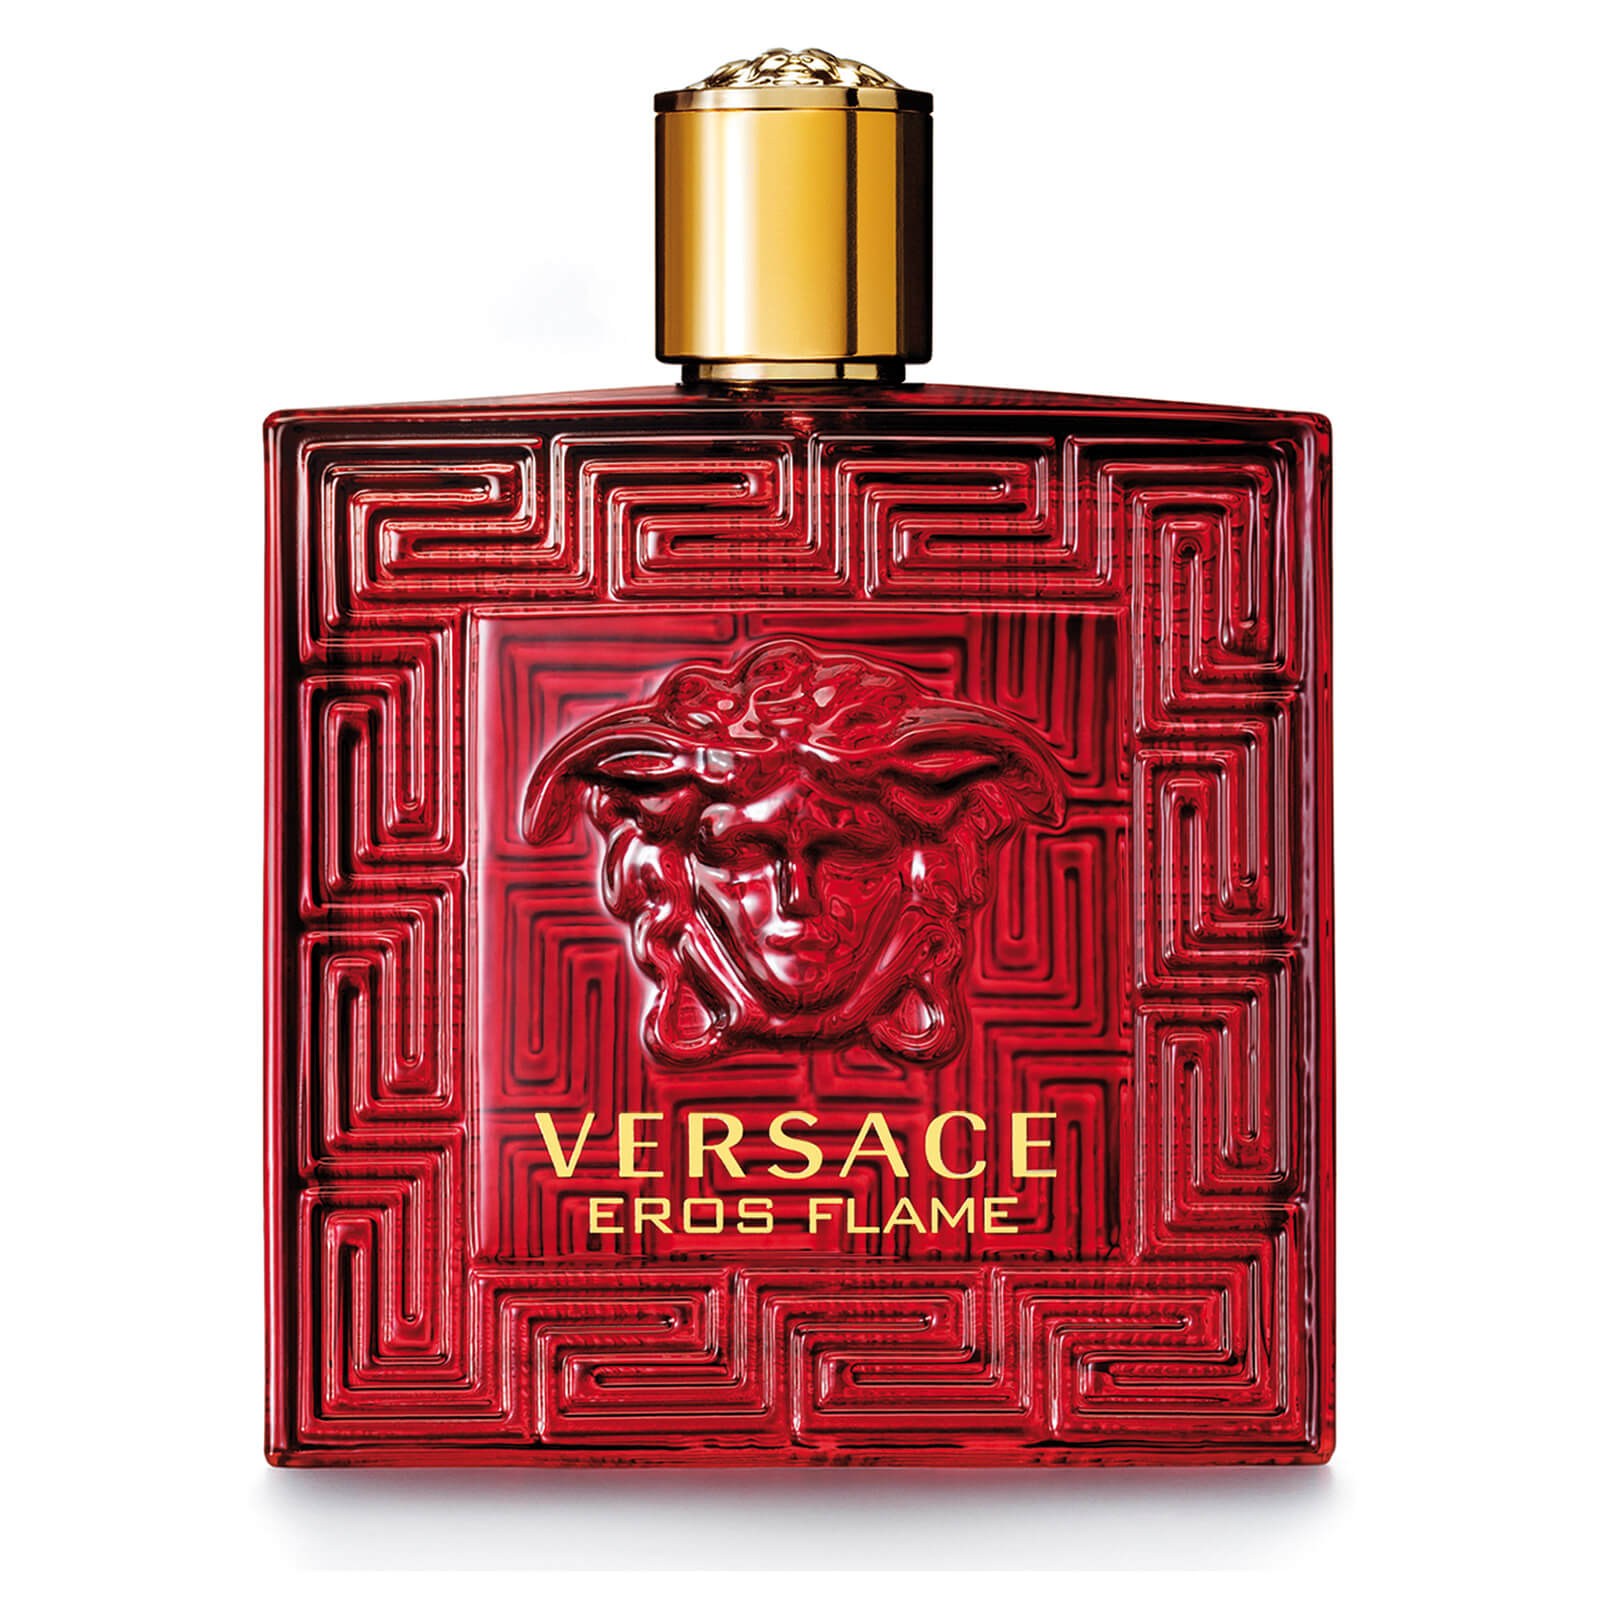 Photos - Other Cosmetics Versace Eros Flame Eau de Parfum 200ml FL741011 